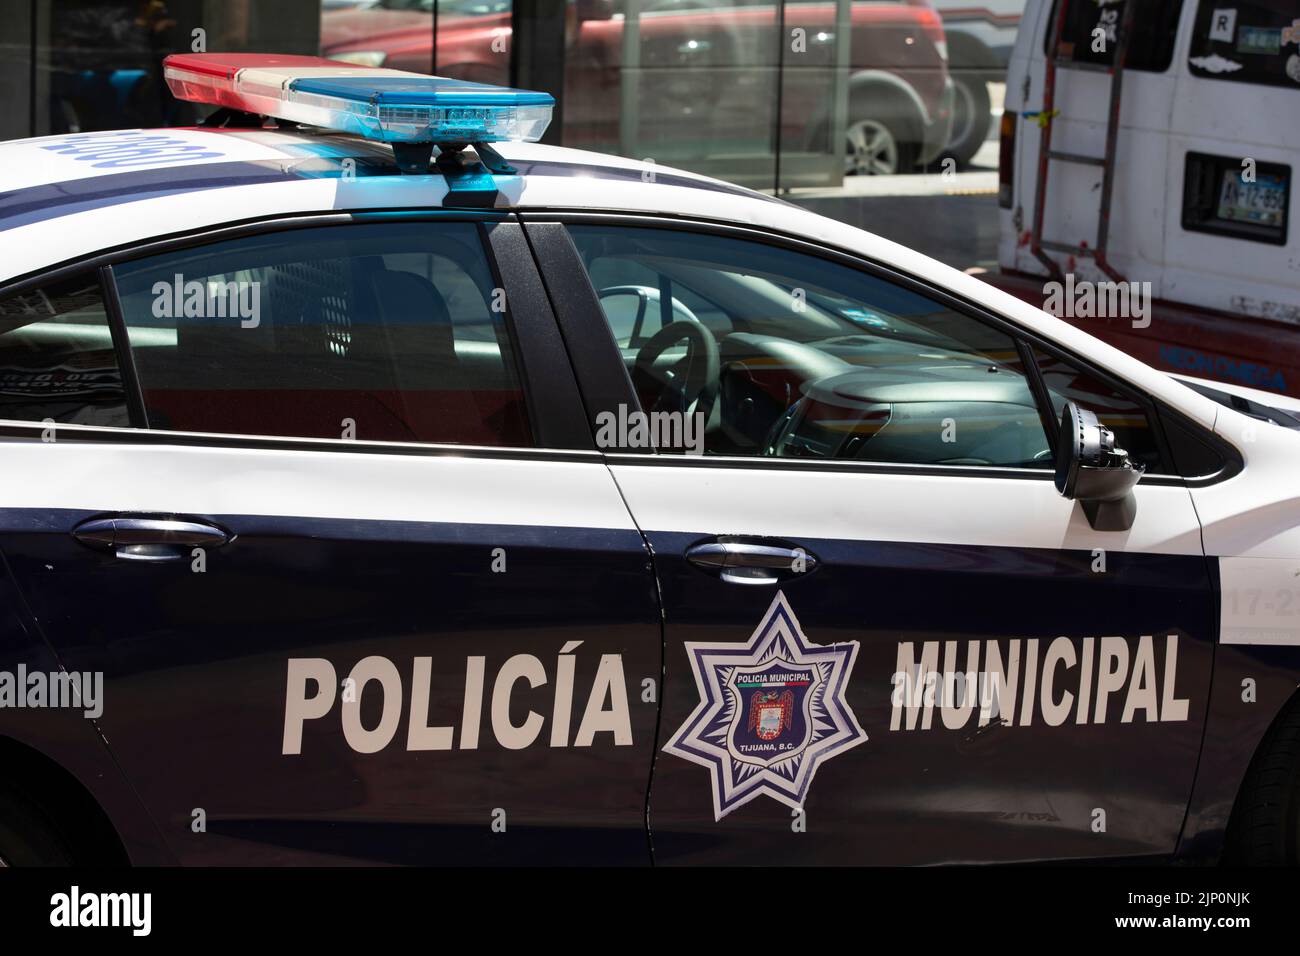 File:Carro Policia Monterrey 2021.jpg - Wikimedia Commons